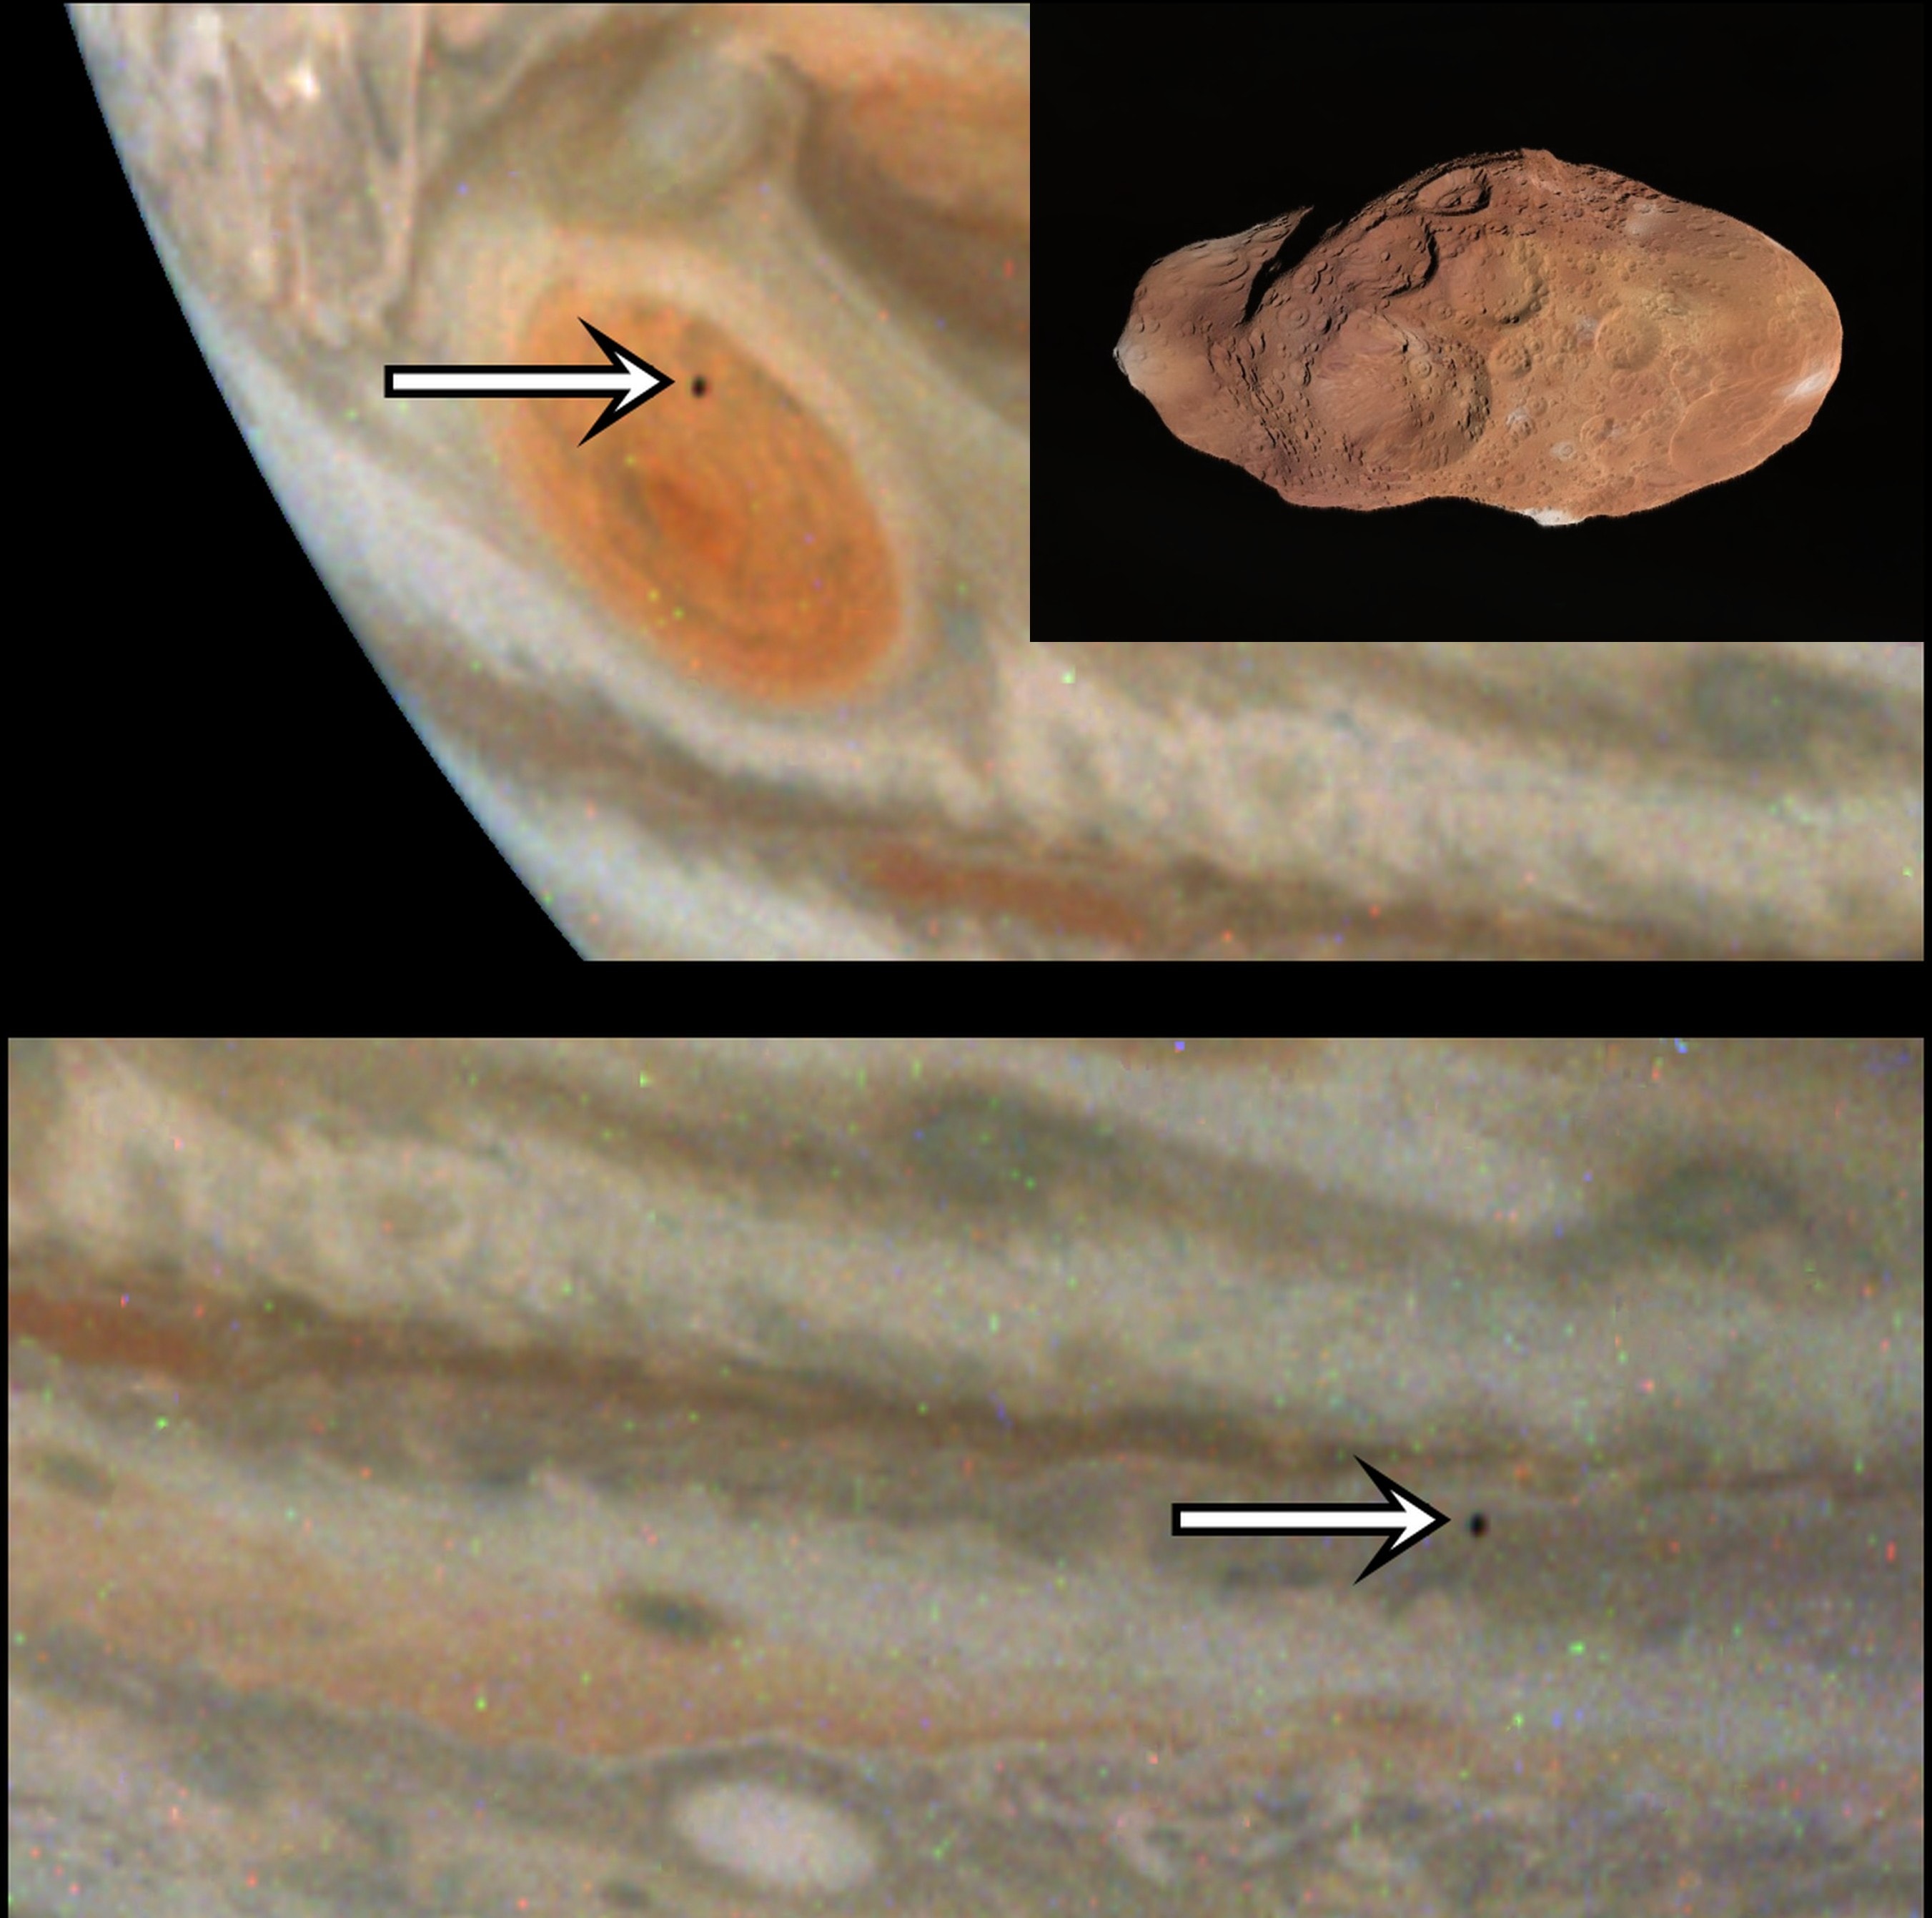 La pequeña luna Amaltea fotobomba de la sonda Juno de la NASA Foto de Júpiter, se ve súper linda